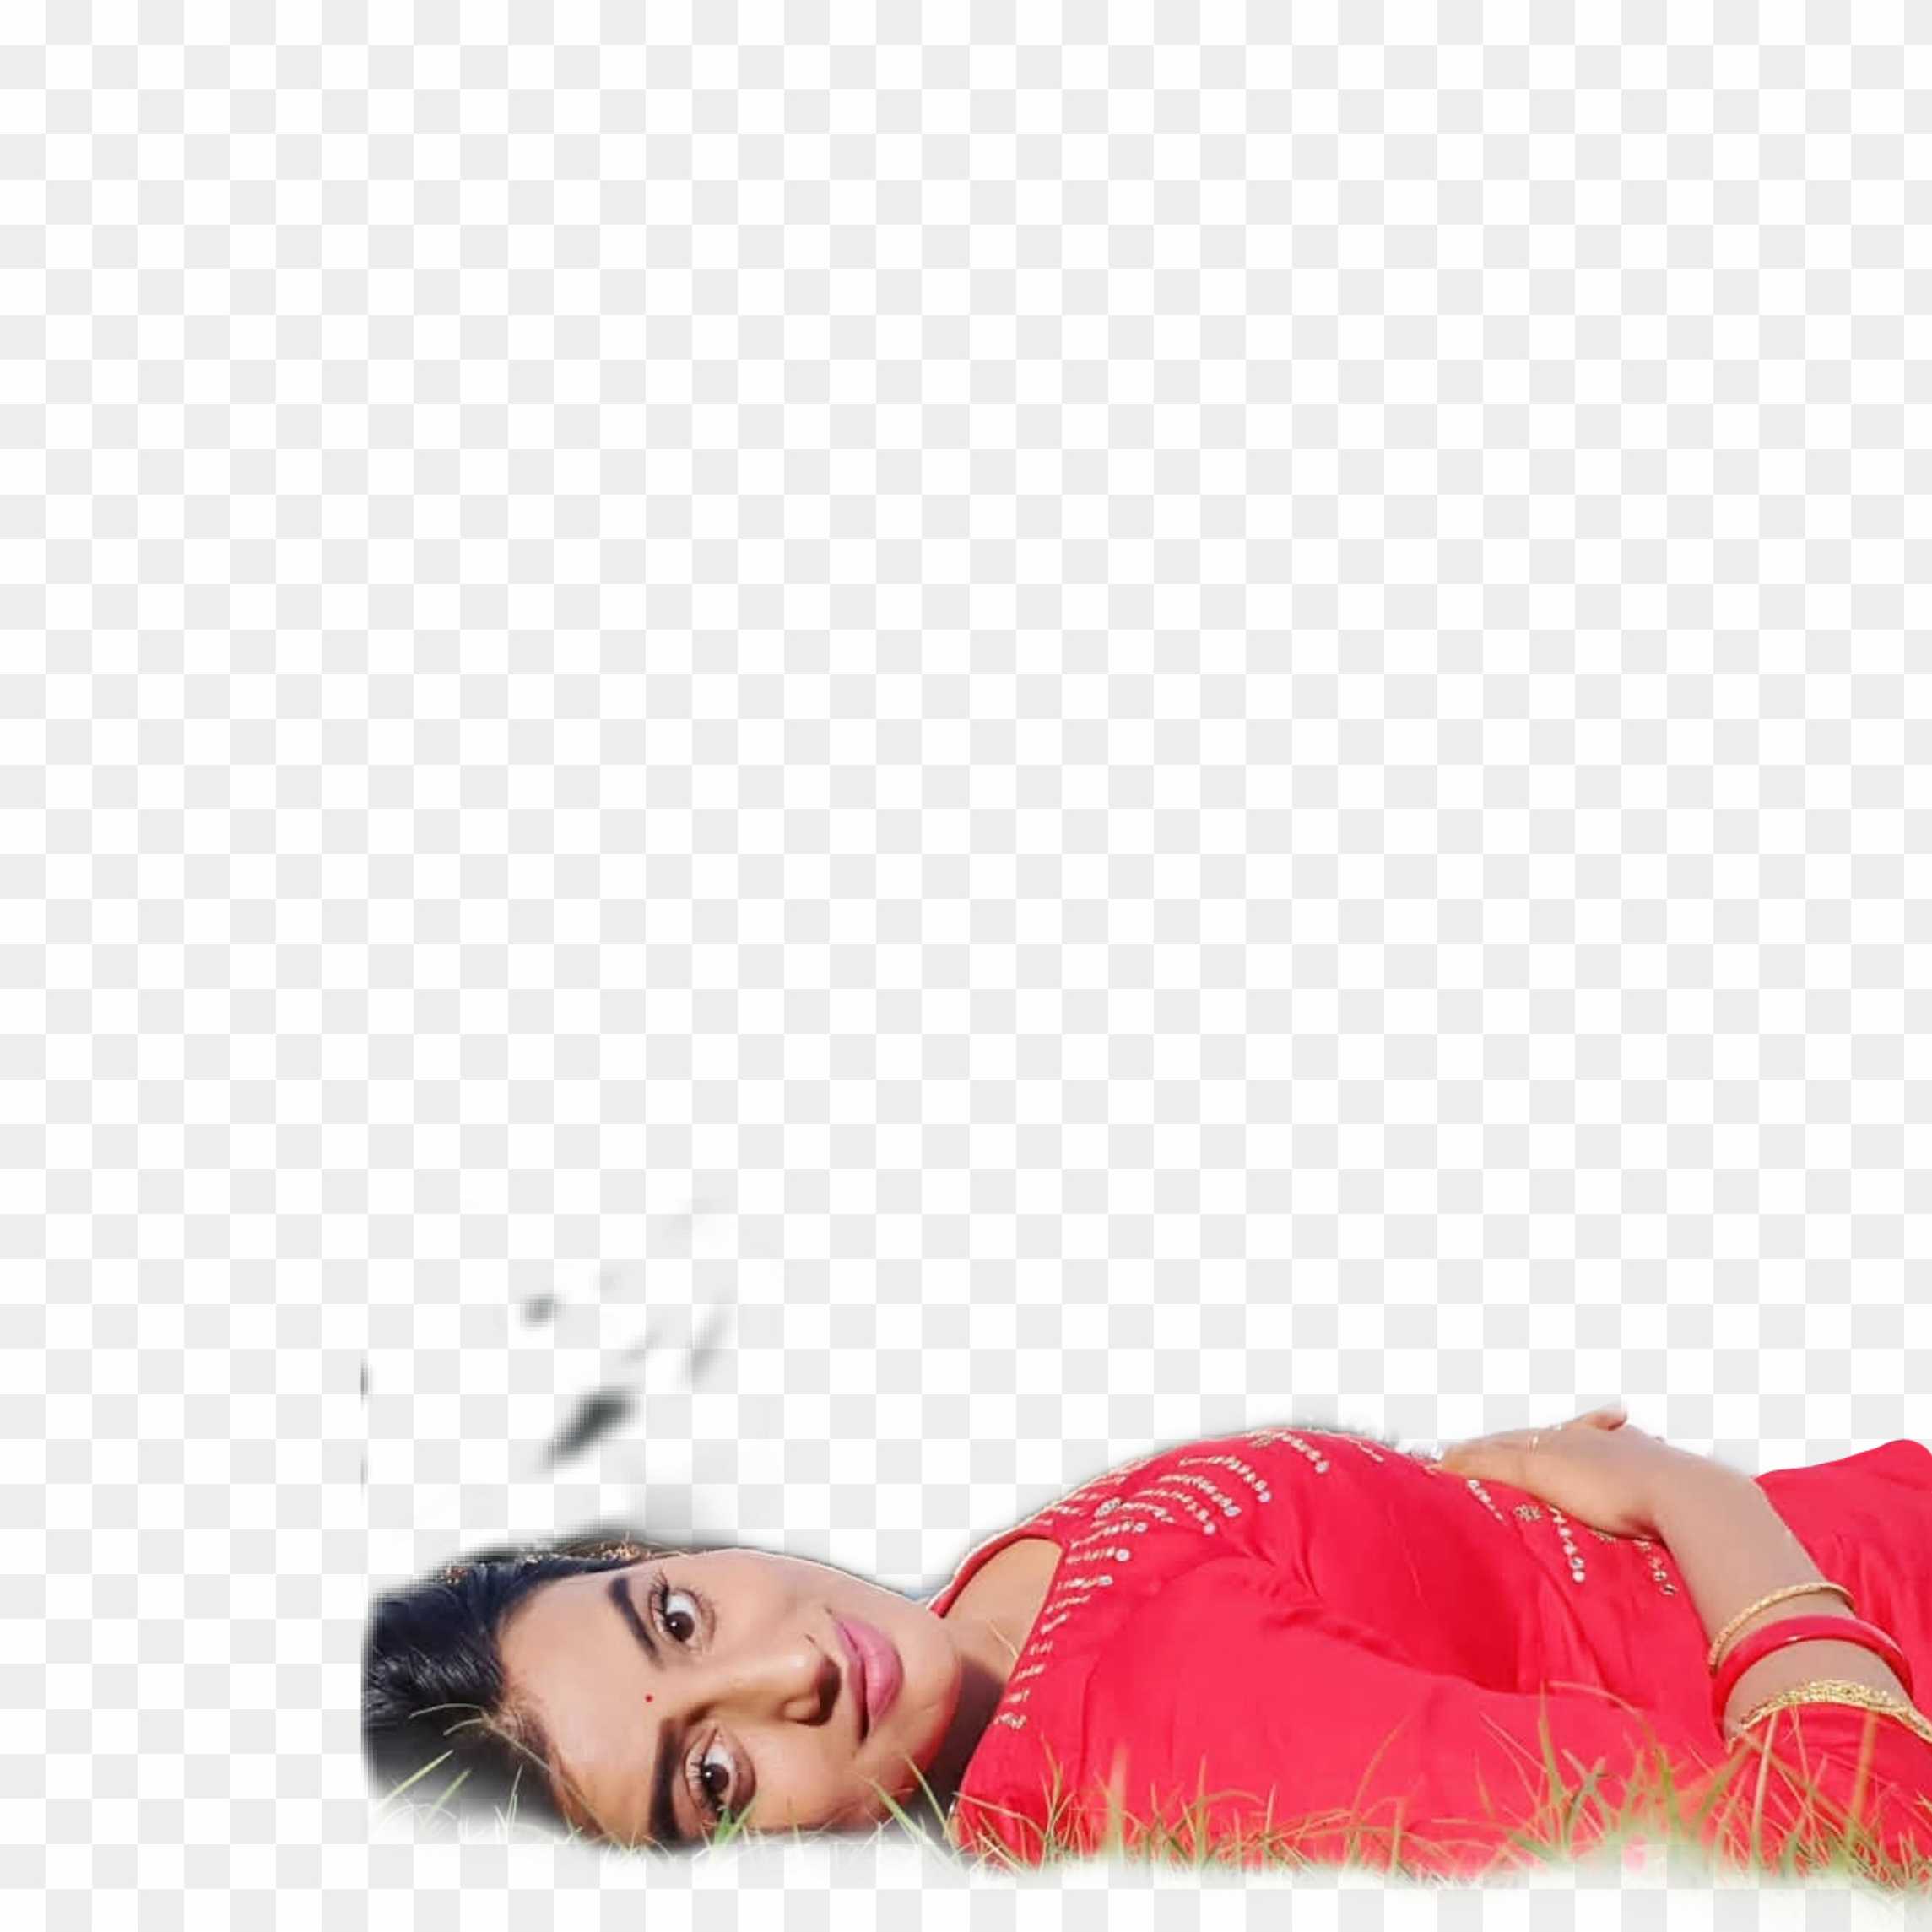 Bhojpuri actress sleeping png images download